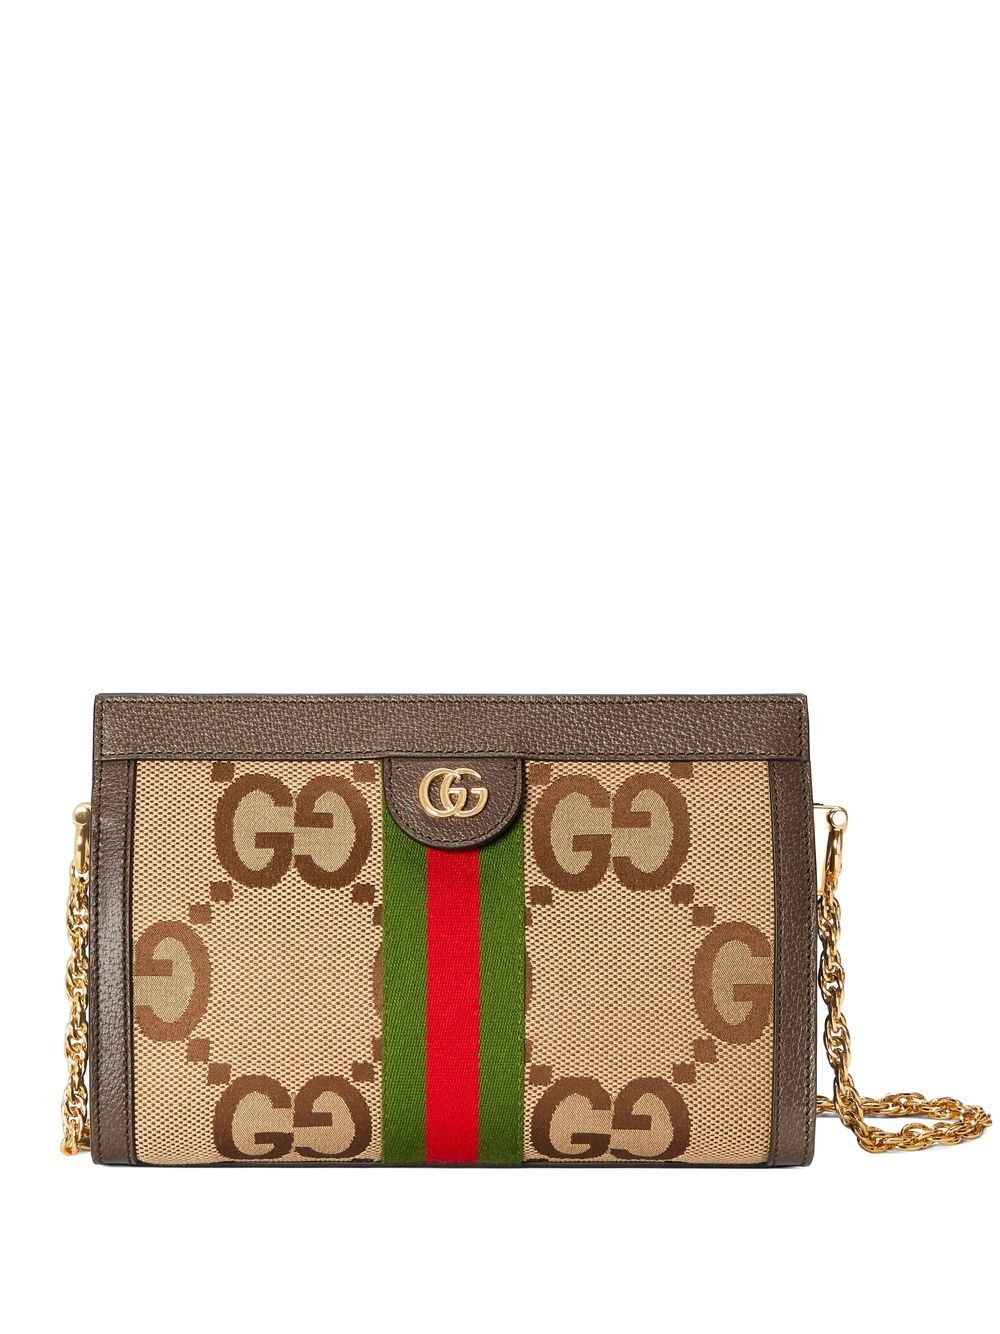 Gucci small Ophidia Jumbo GG bag - Brown von Gucci